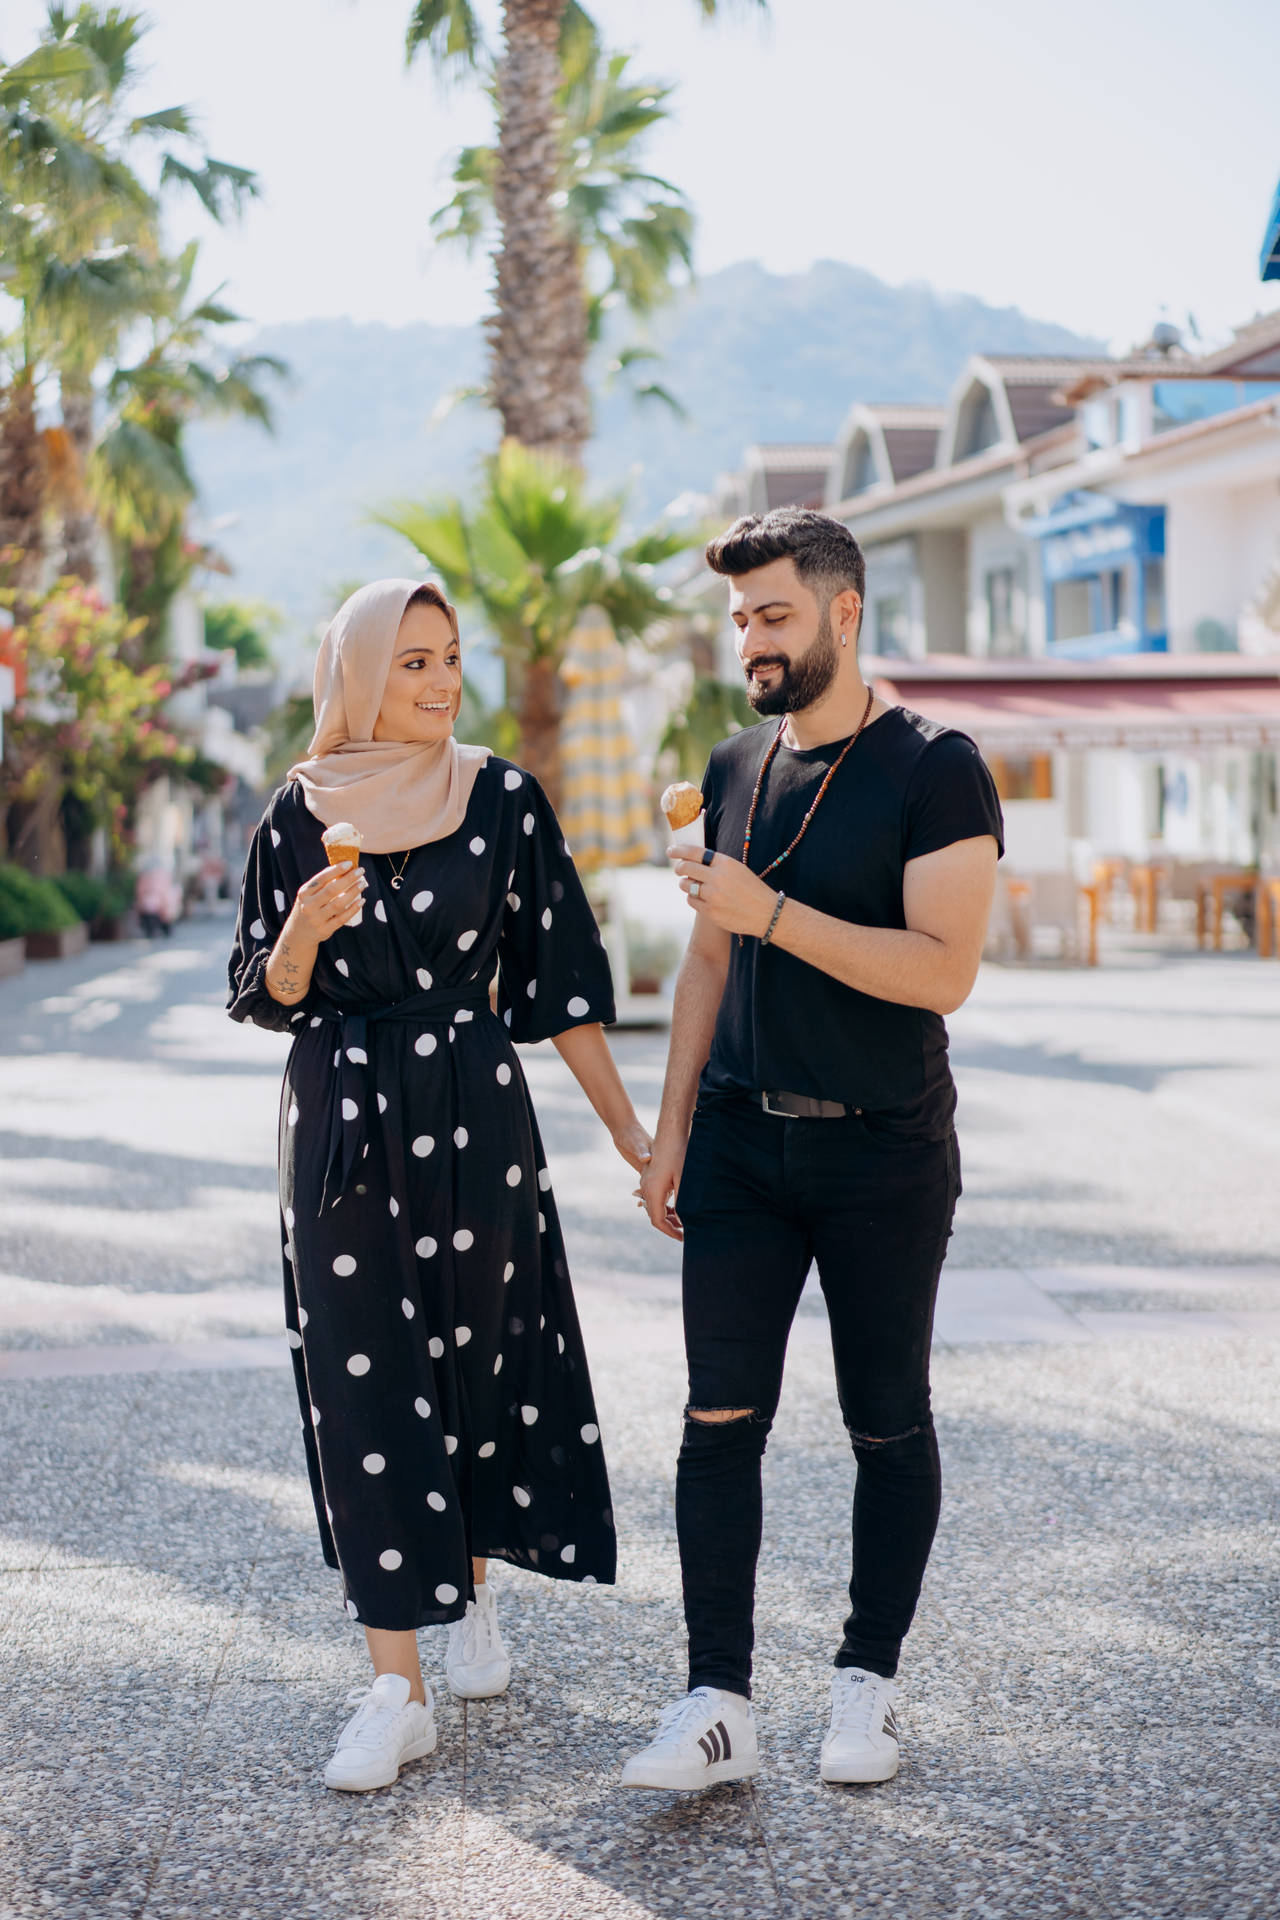 Muslim Couple With Ice Cream Background